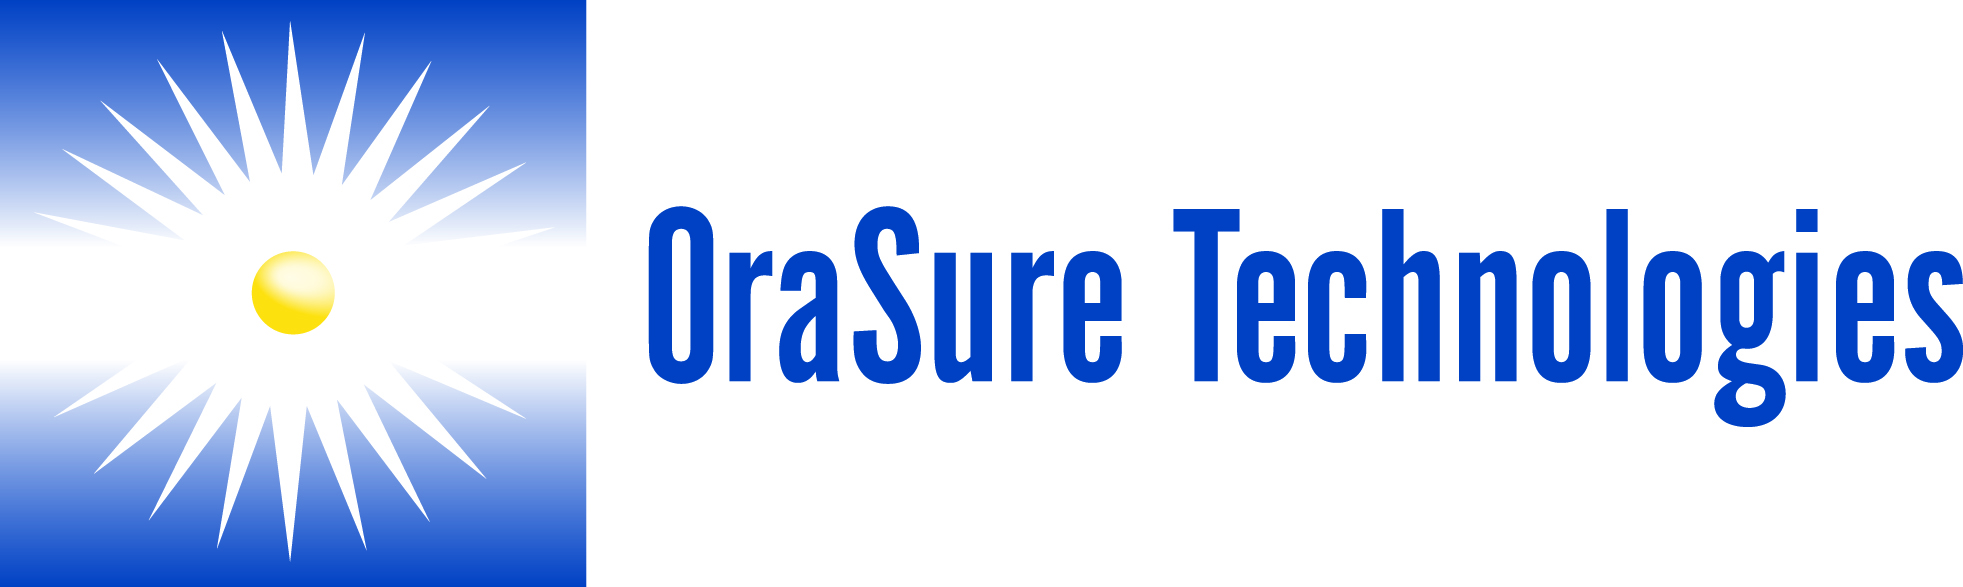 Orasure Enters into $75M agreement with AbbVie for Rapid Hepatitis C Test